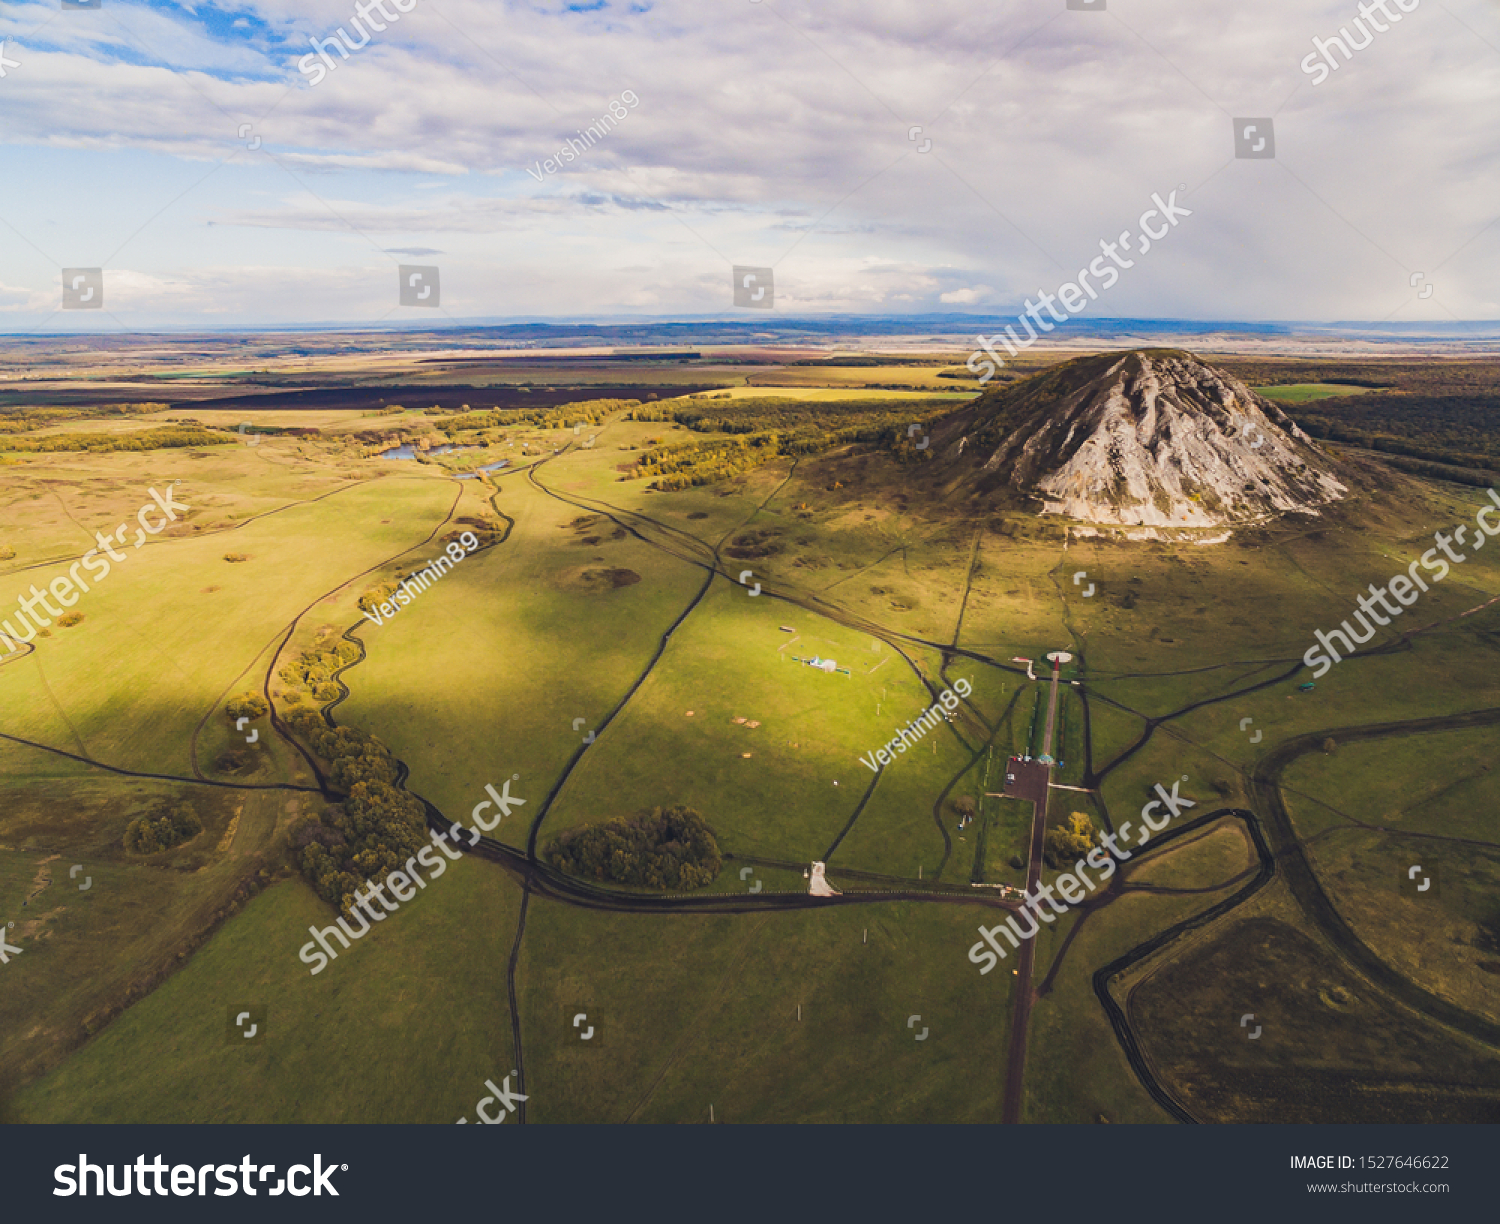 Mount Shihan Toratau near the city of Ishimbai. Symbol of the city of Ishimbai. Bashkortostan. Russia. #1527646622